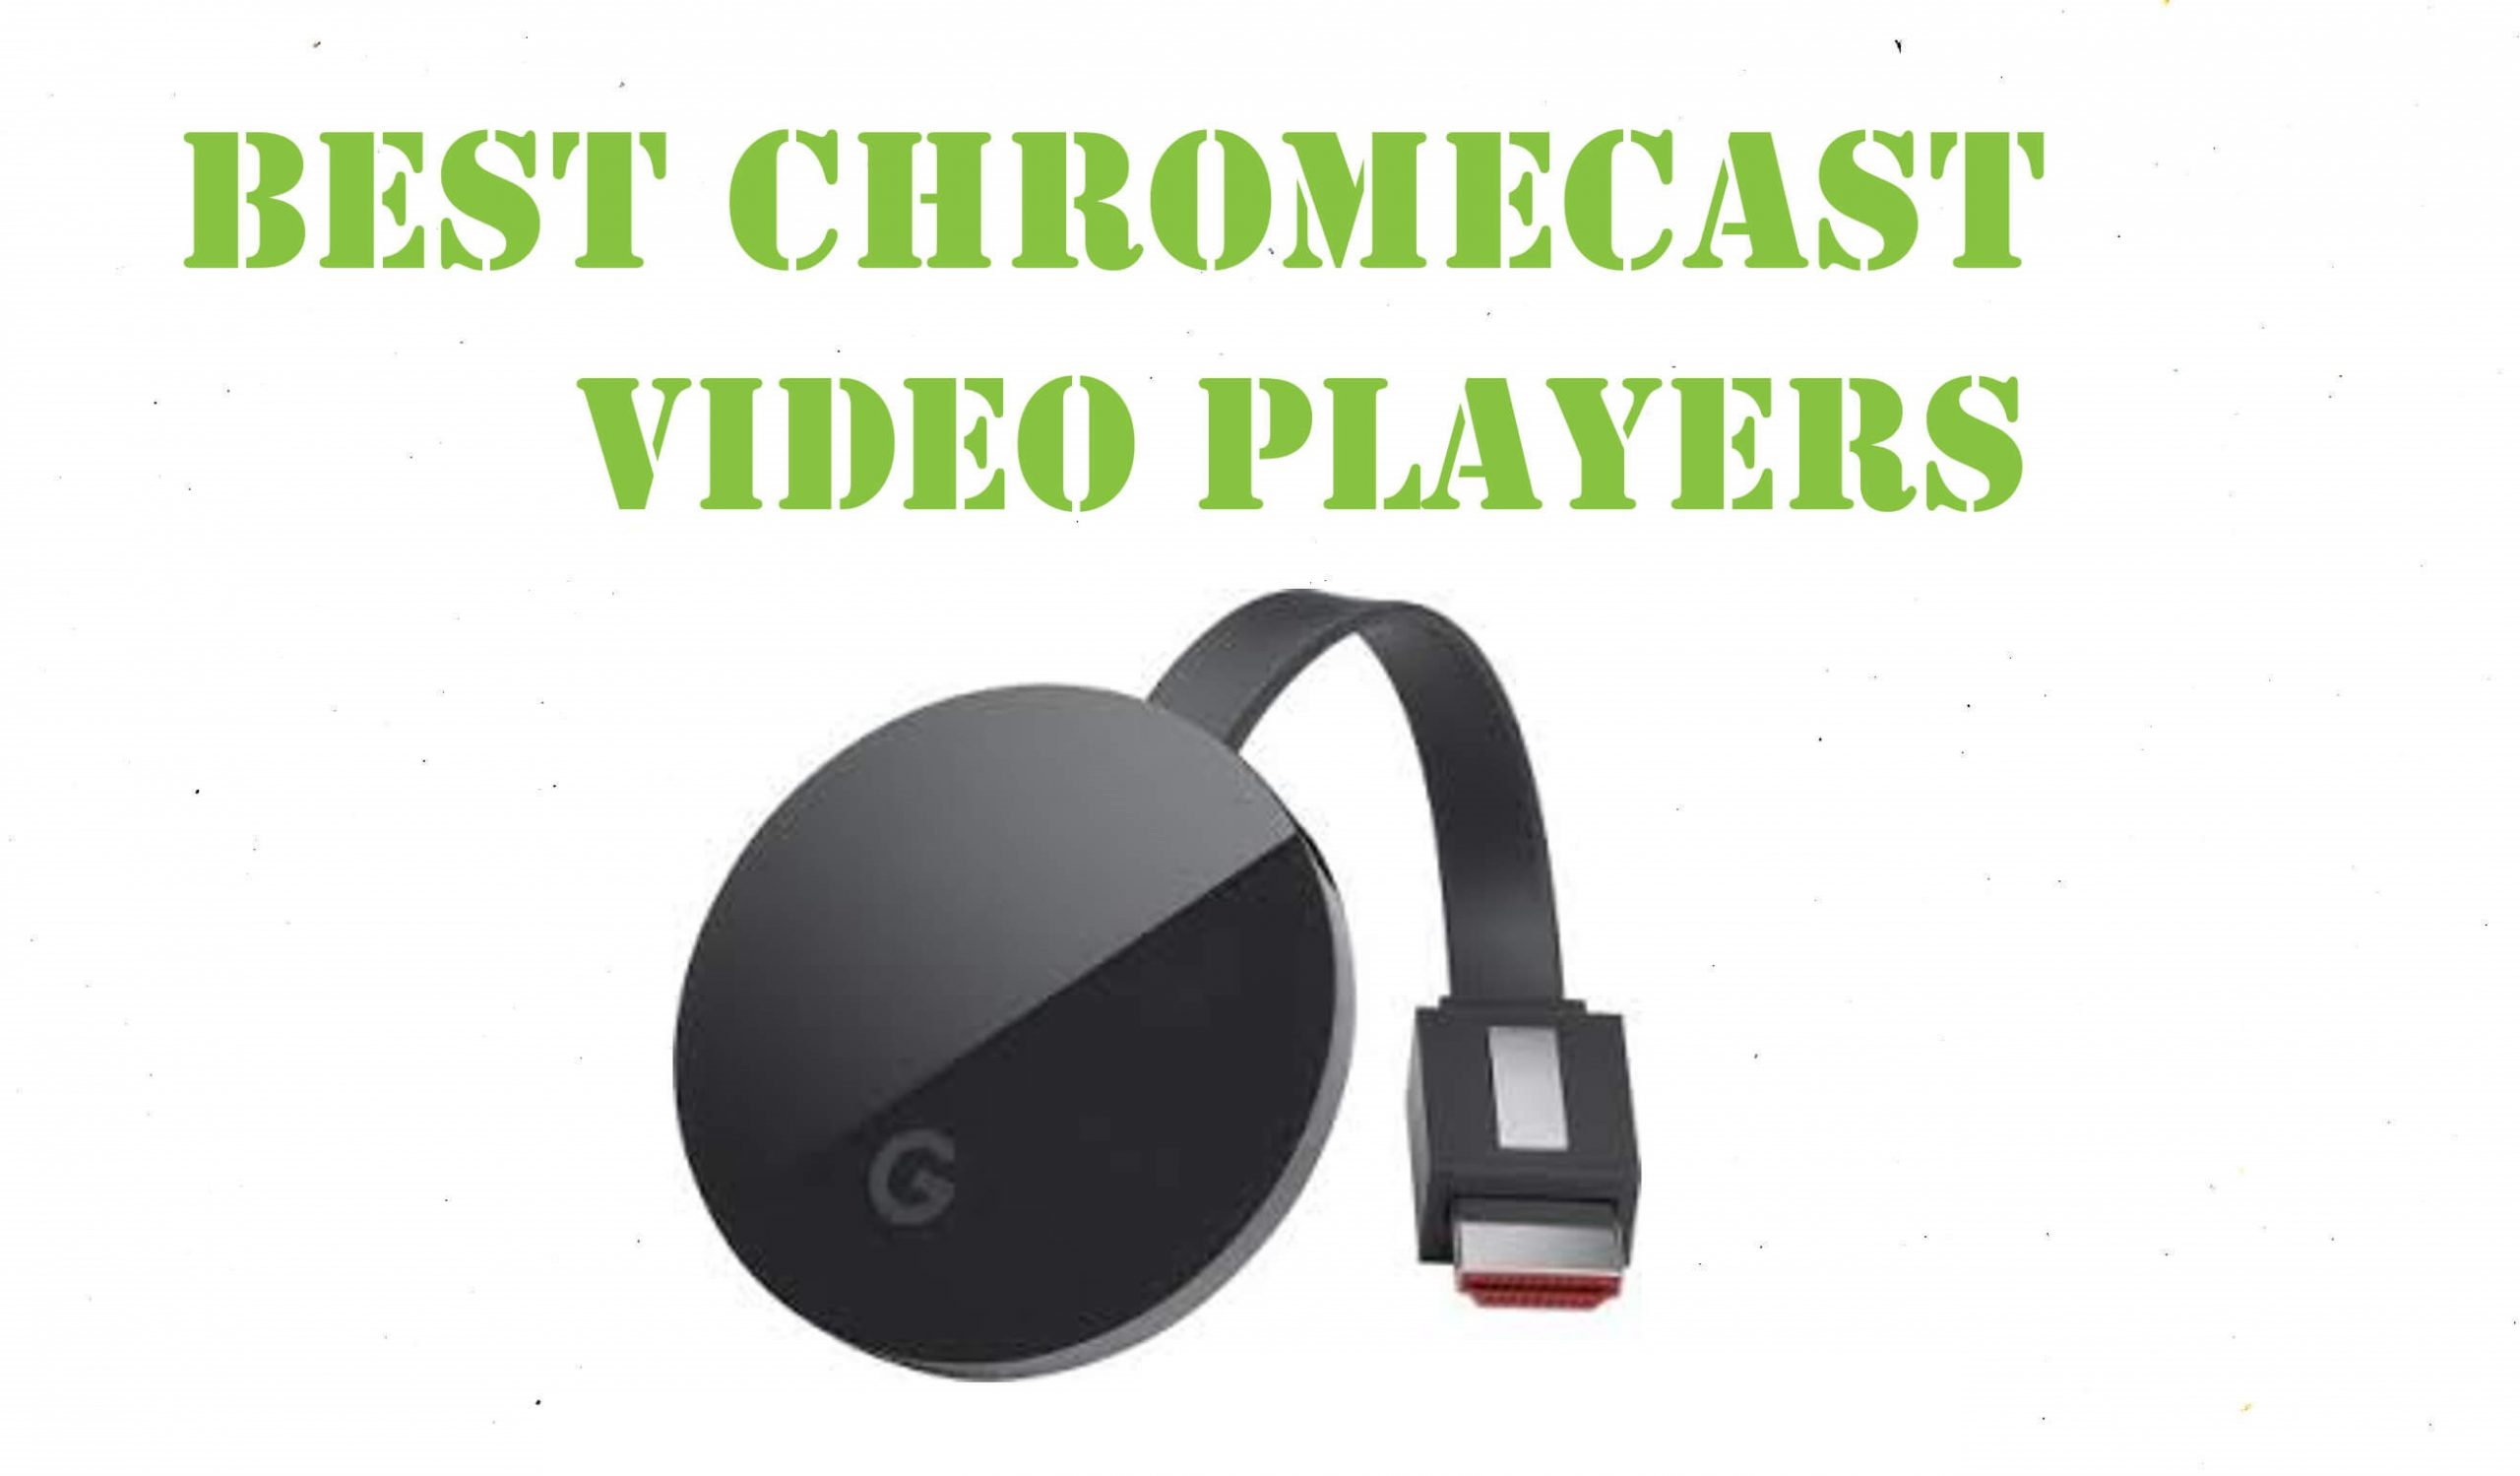 chromecast app for windows 10 free download